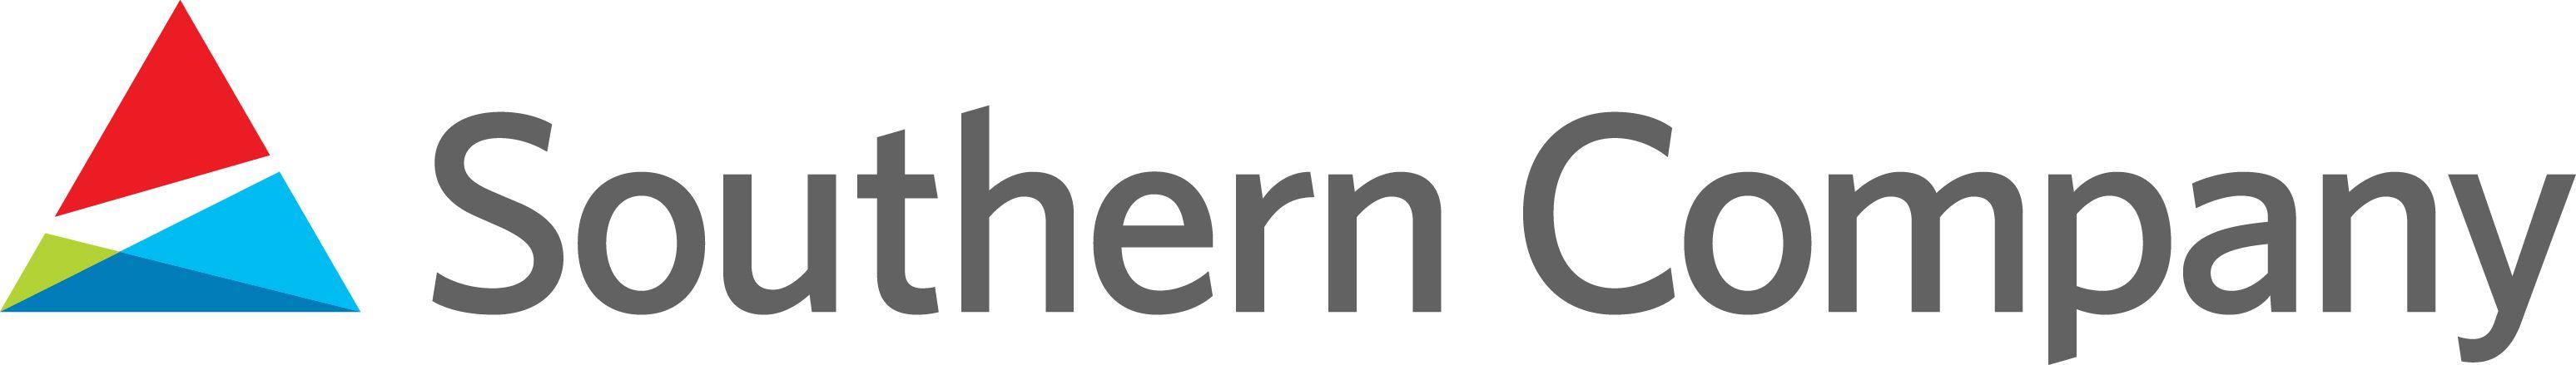 Southern Nuclear Logo - Southern company Logos